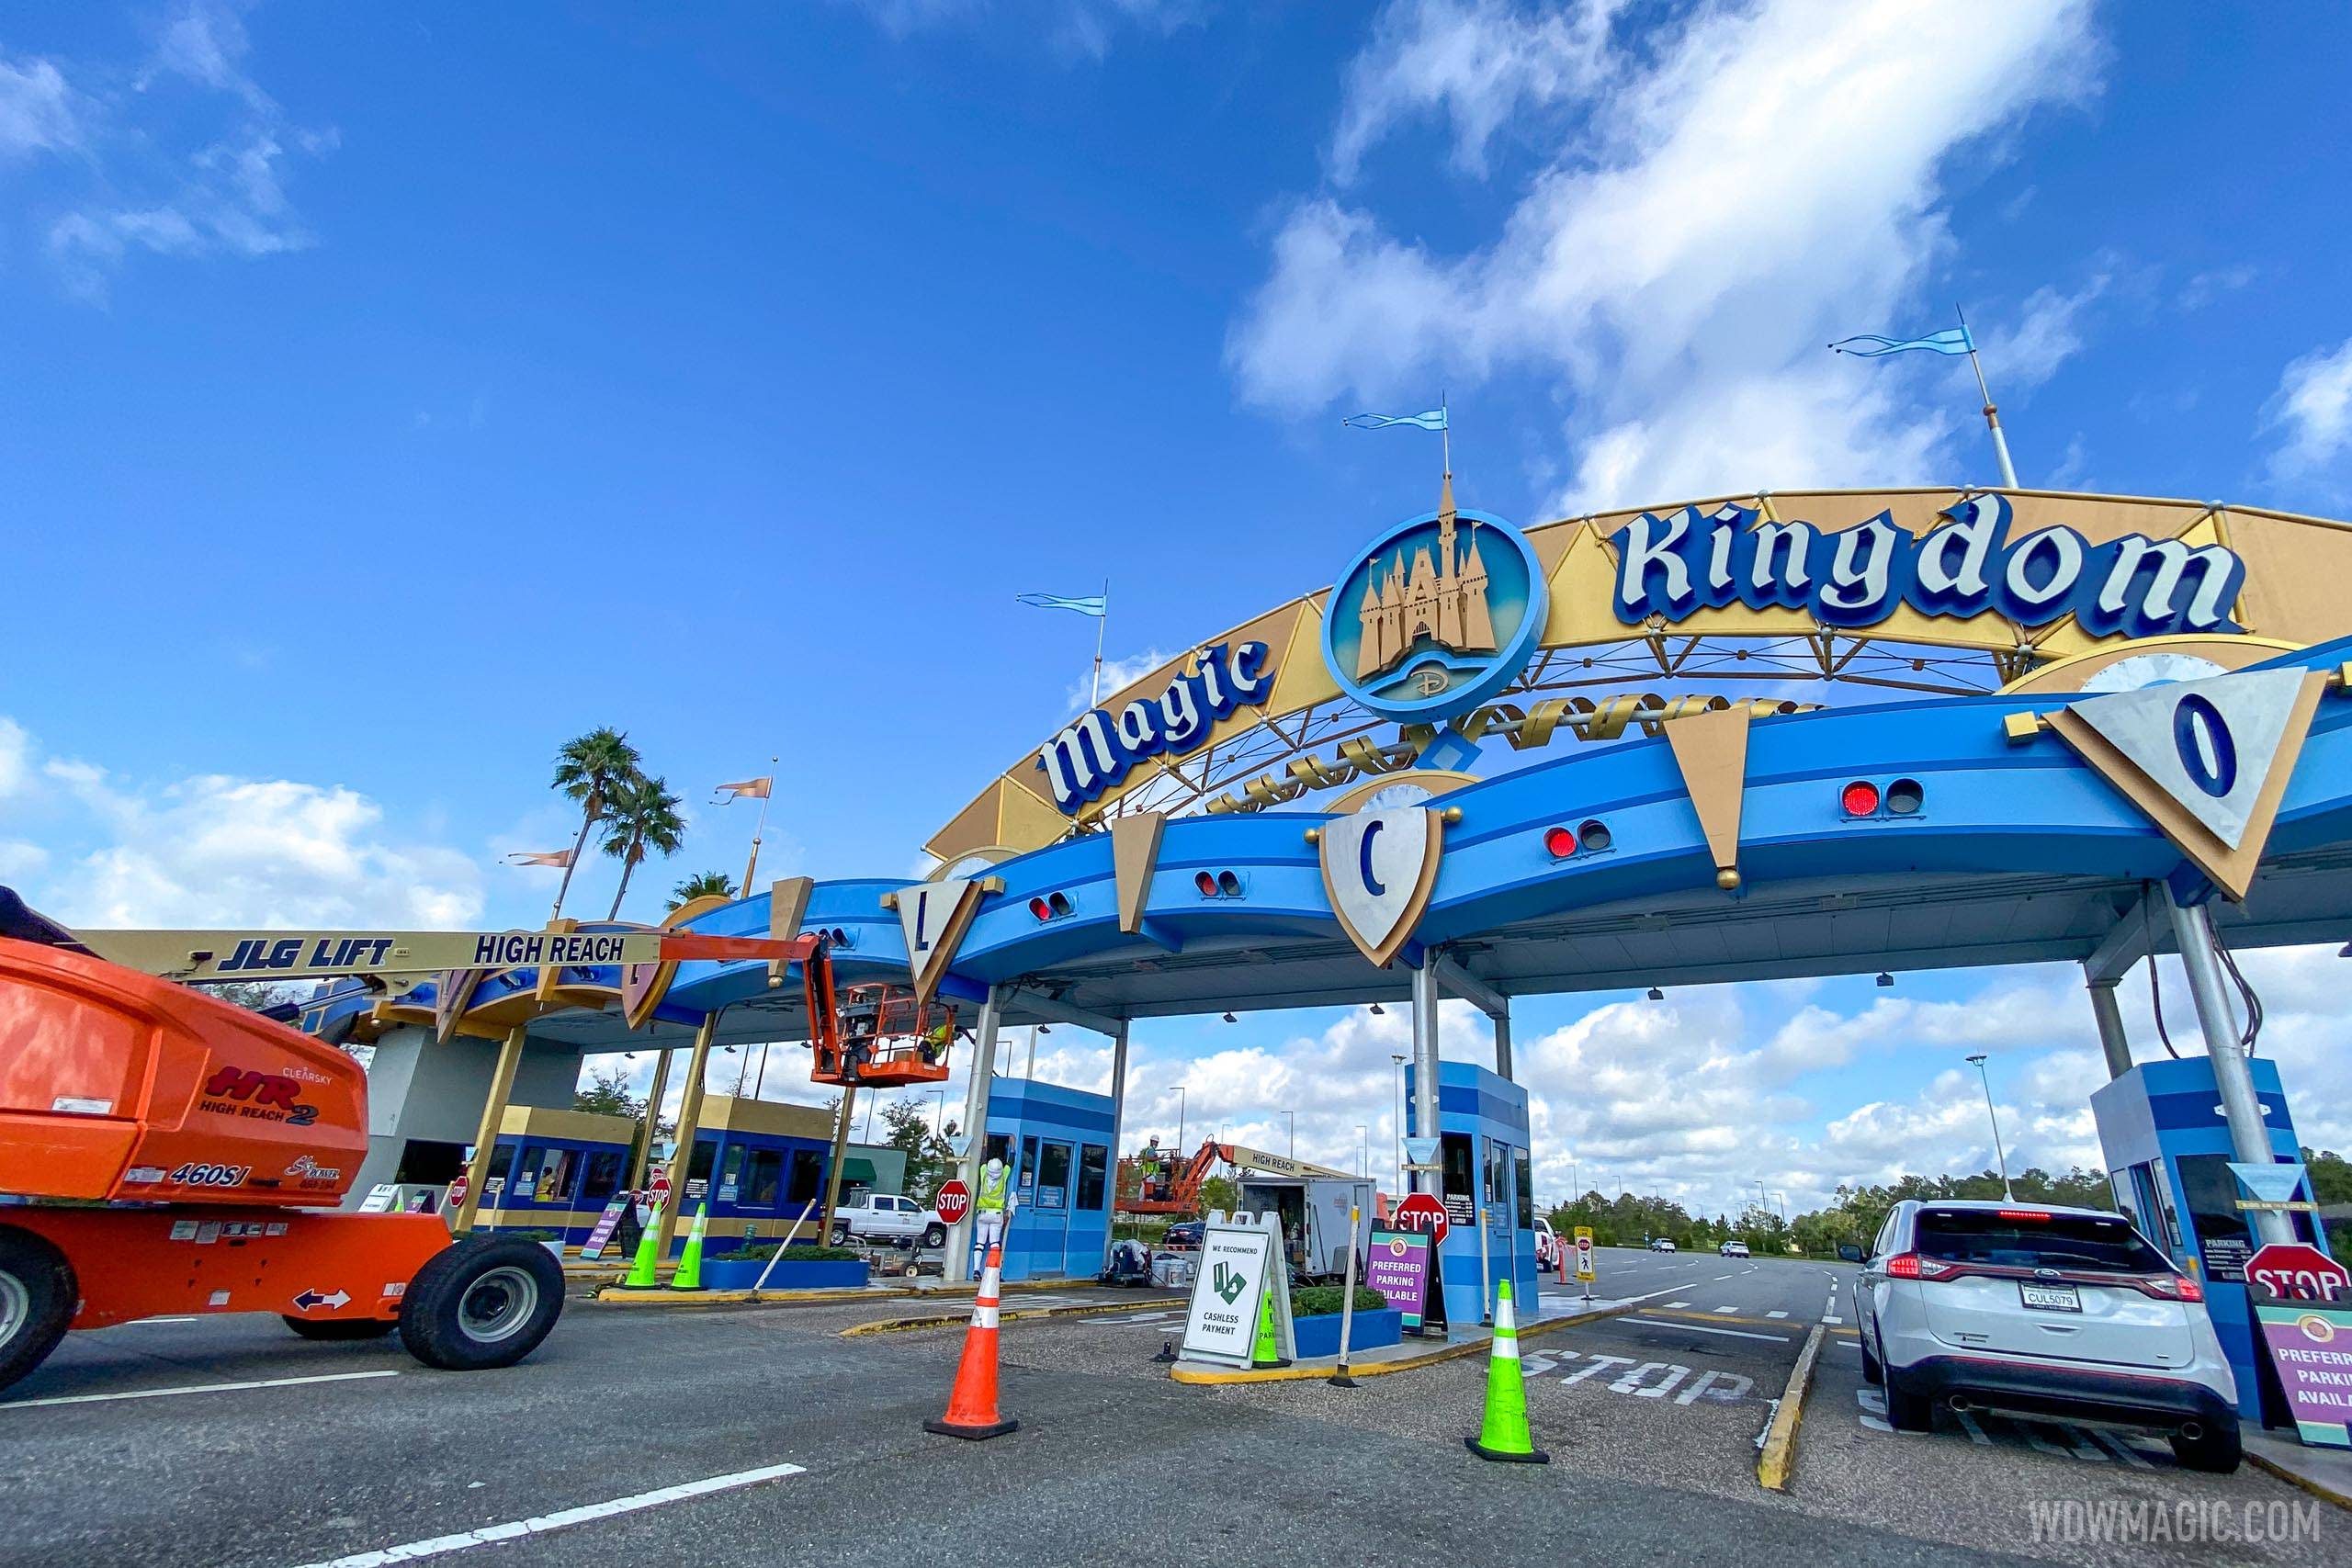 PHOTOS - New look Magic Kingdom auto-plaza shares similar color scheme with Cinderella Castle